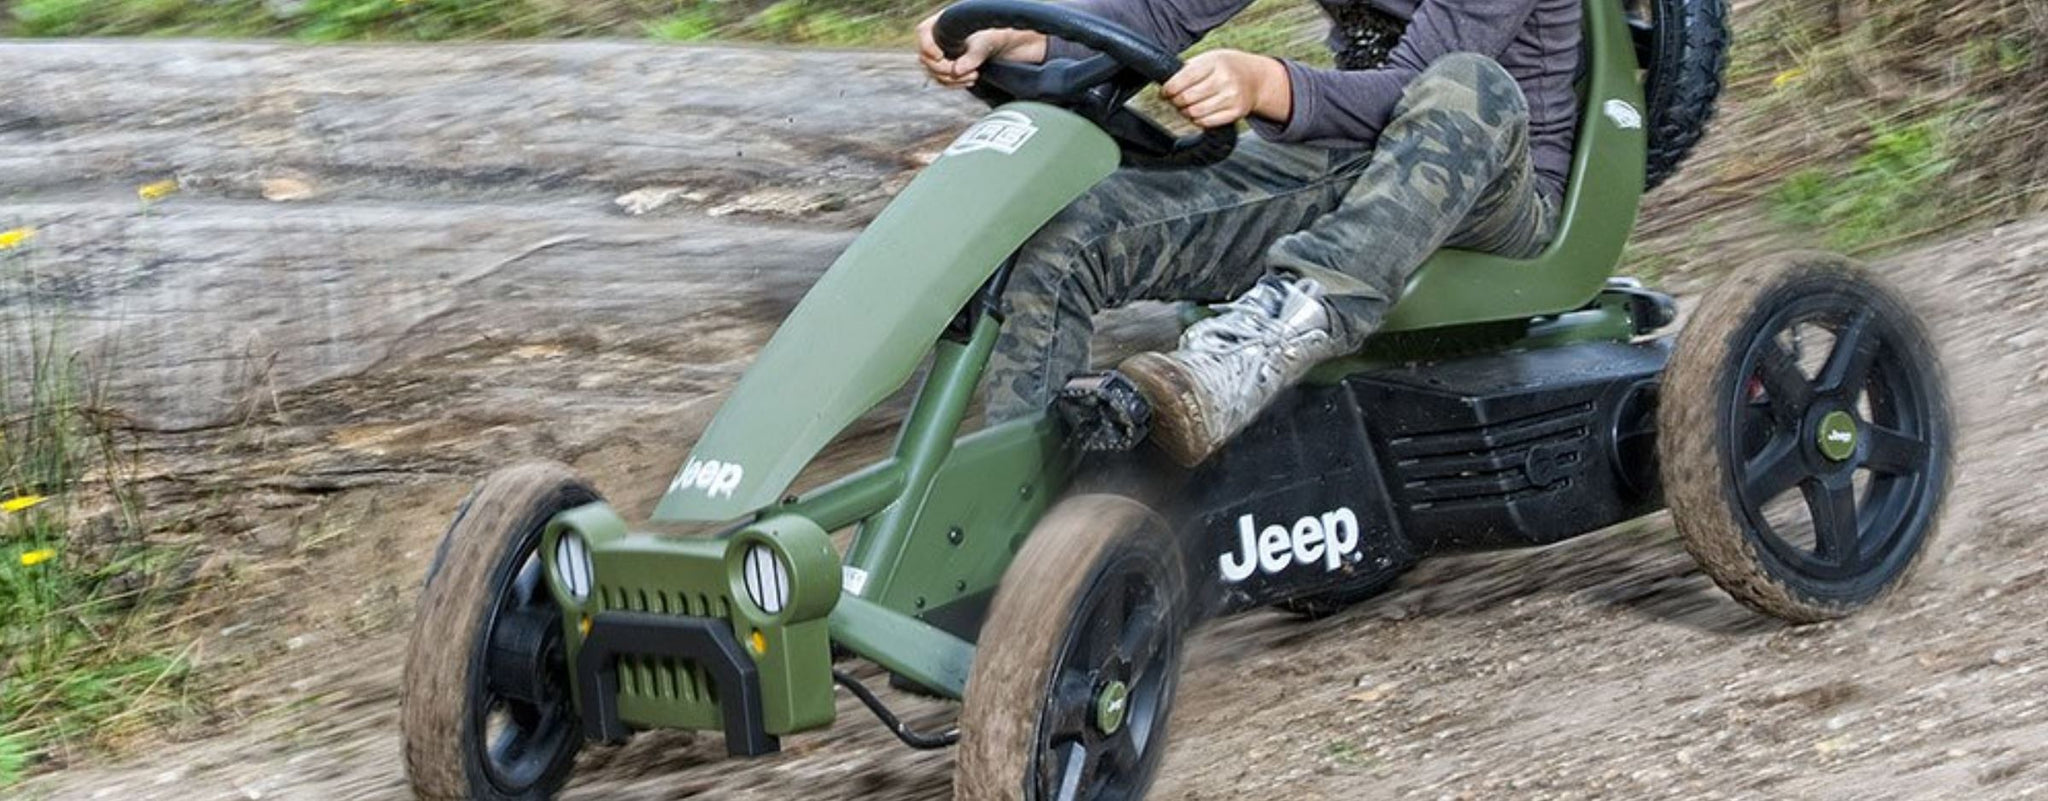 BERG Jeep Adventure Pedal-Go Kart